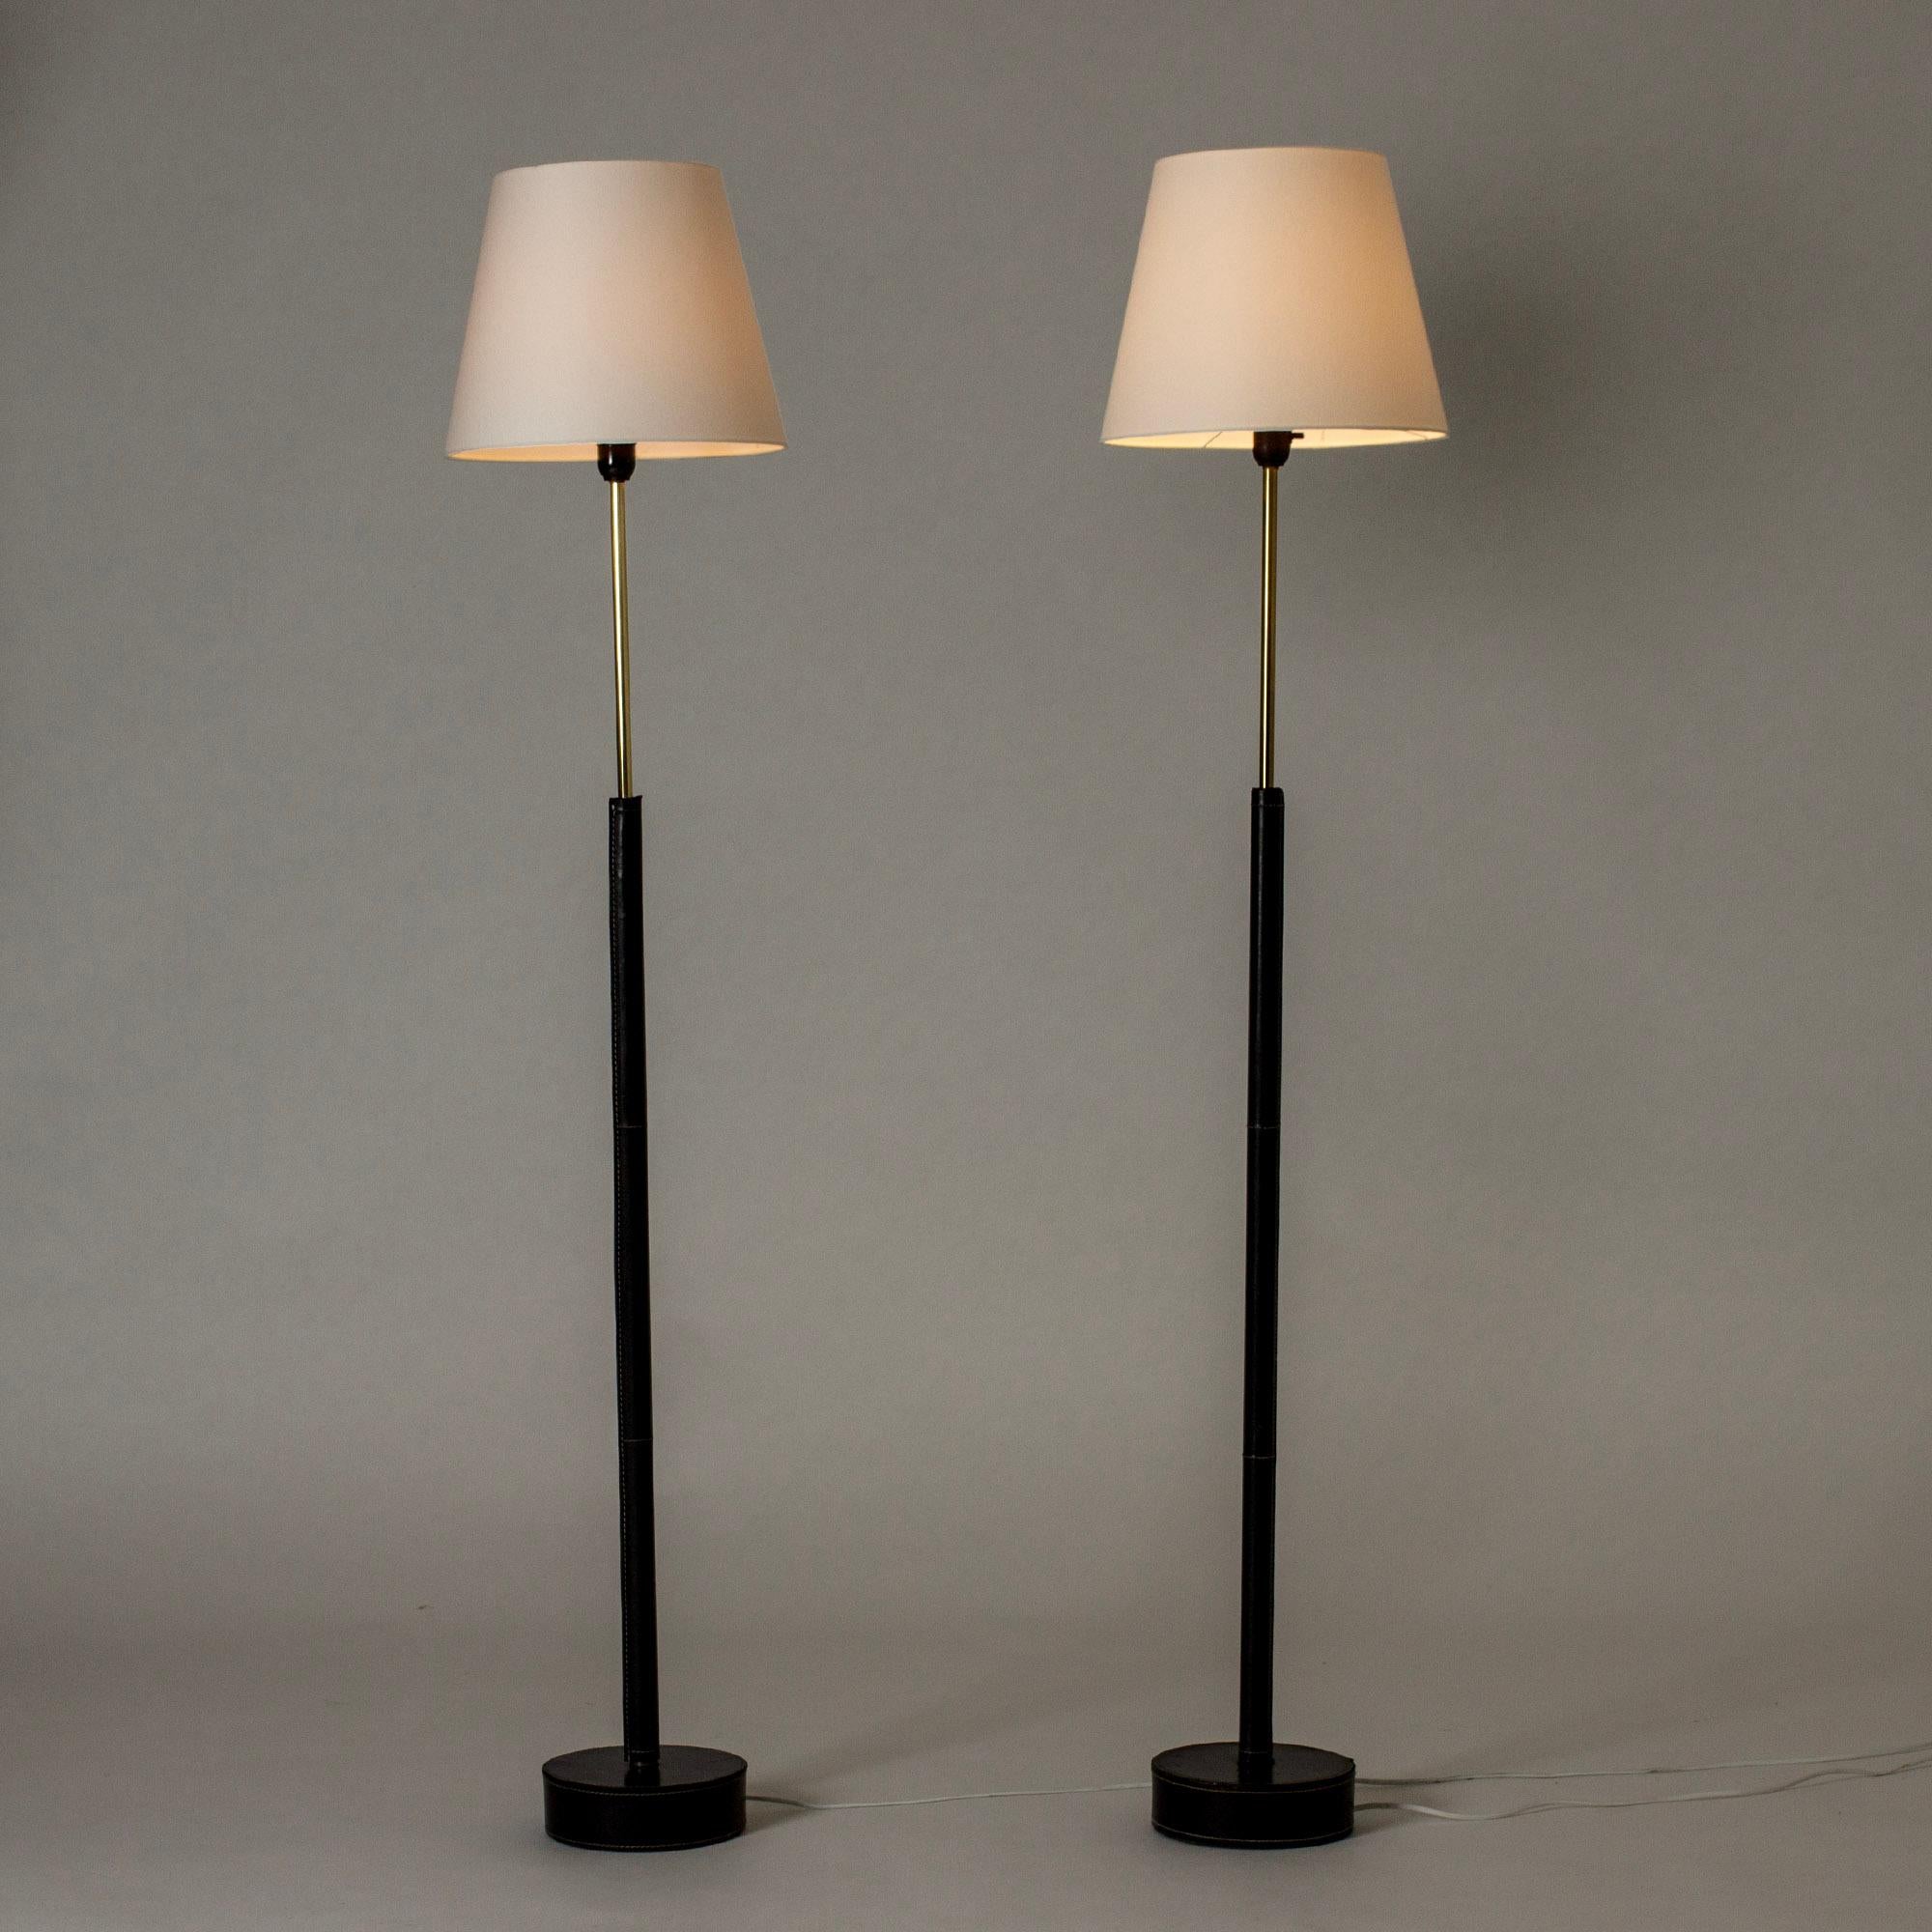 Brass Swedish Midcentury Floor Lamps from Bergboms, Sweden, 1950s For Sale